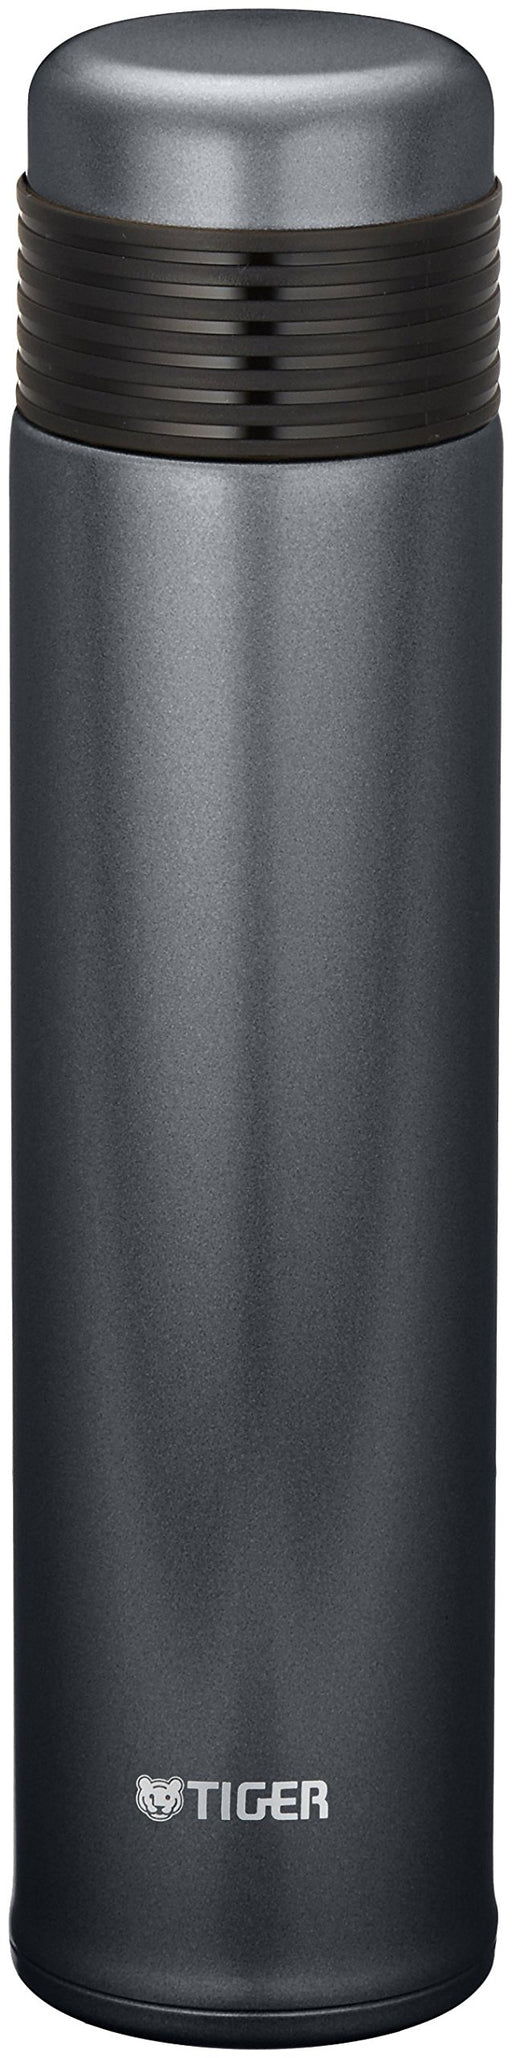 Tiger water bottle 500ml stainless steel w/ cup Sahara slim metallic MSE-A050-KM_1